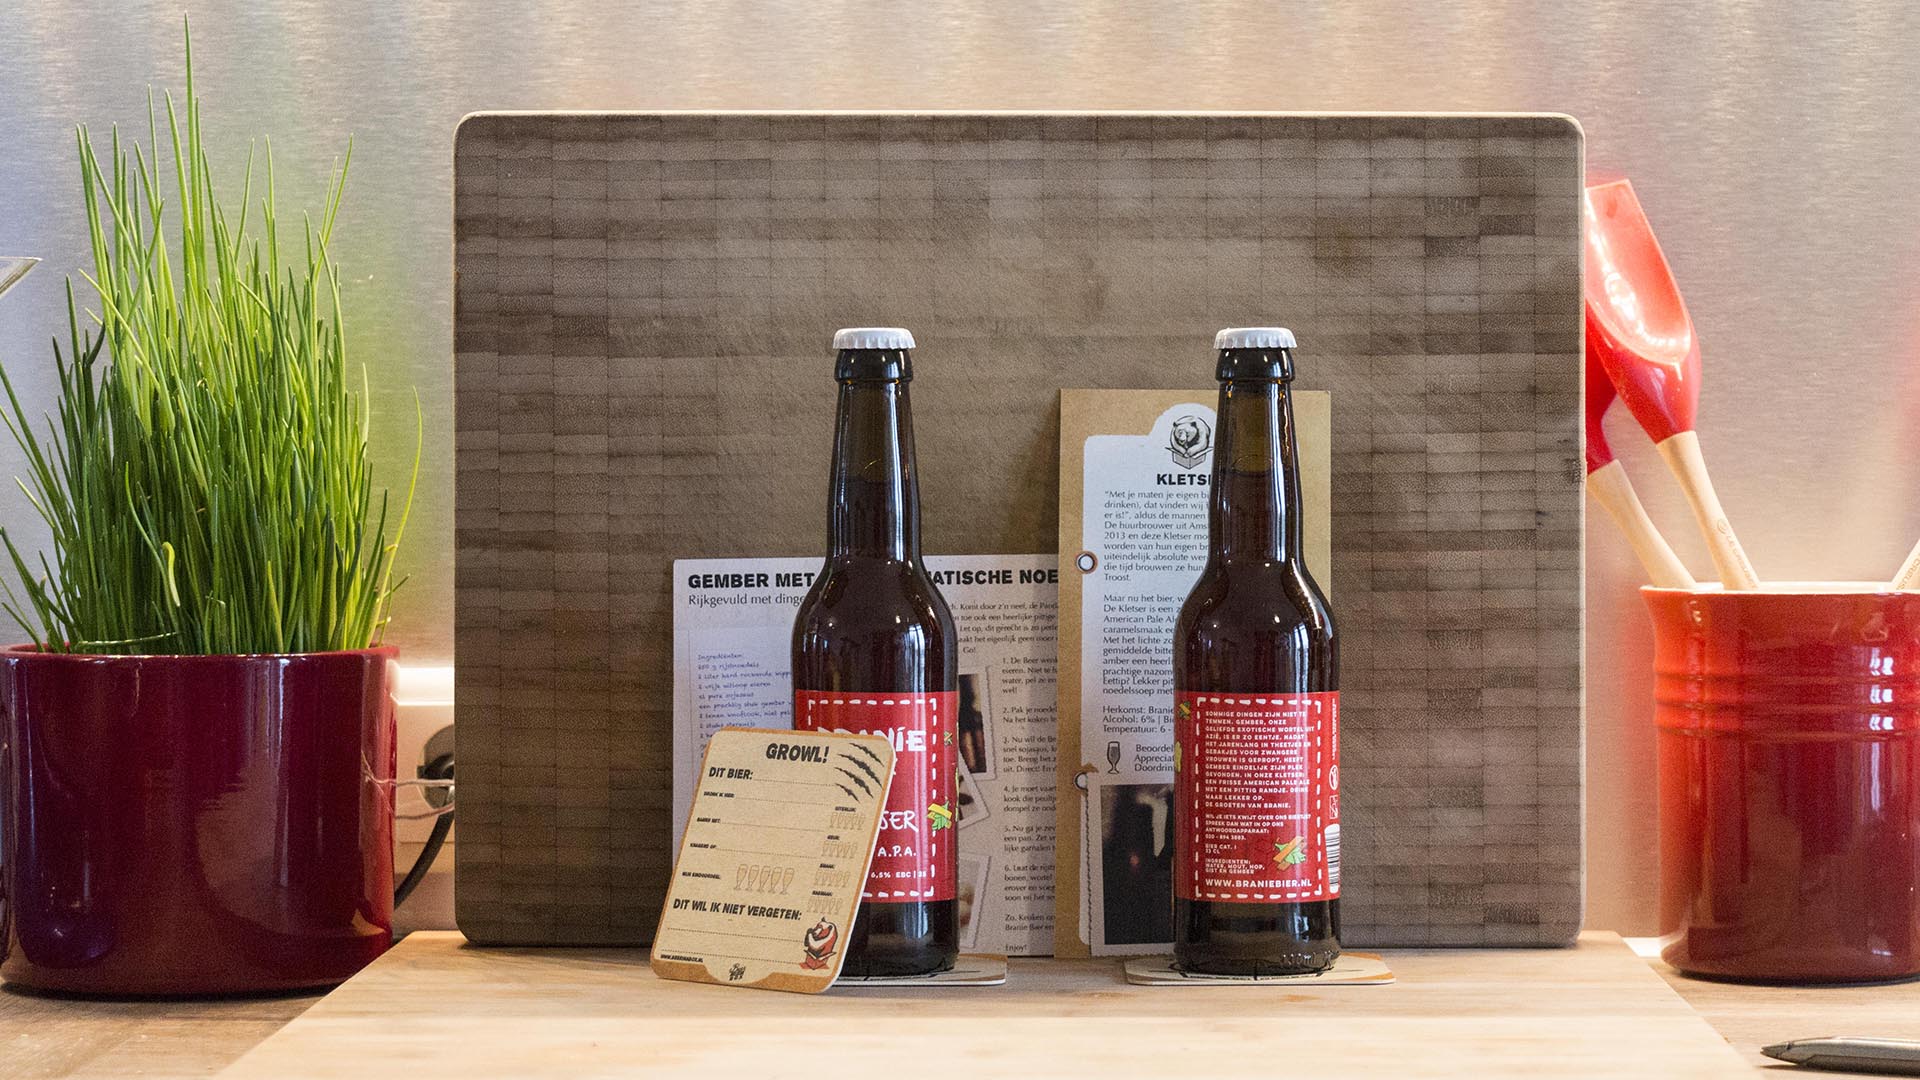 Review van GadgetGear over Beer in a Box